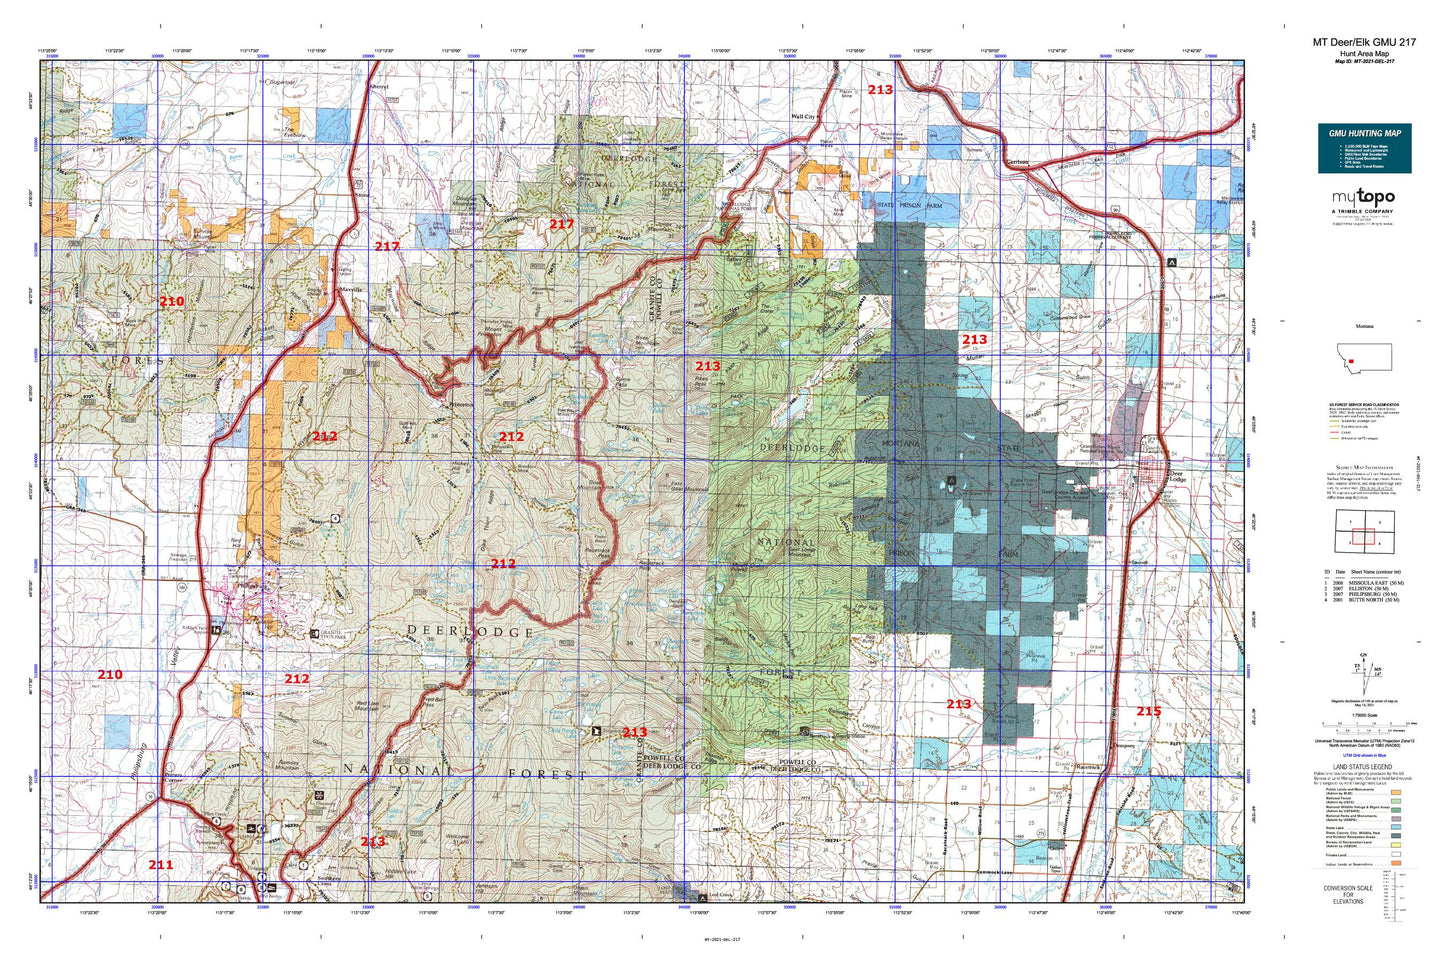 Montana Deer/Elk GMU 217 Map Image